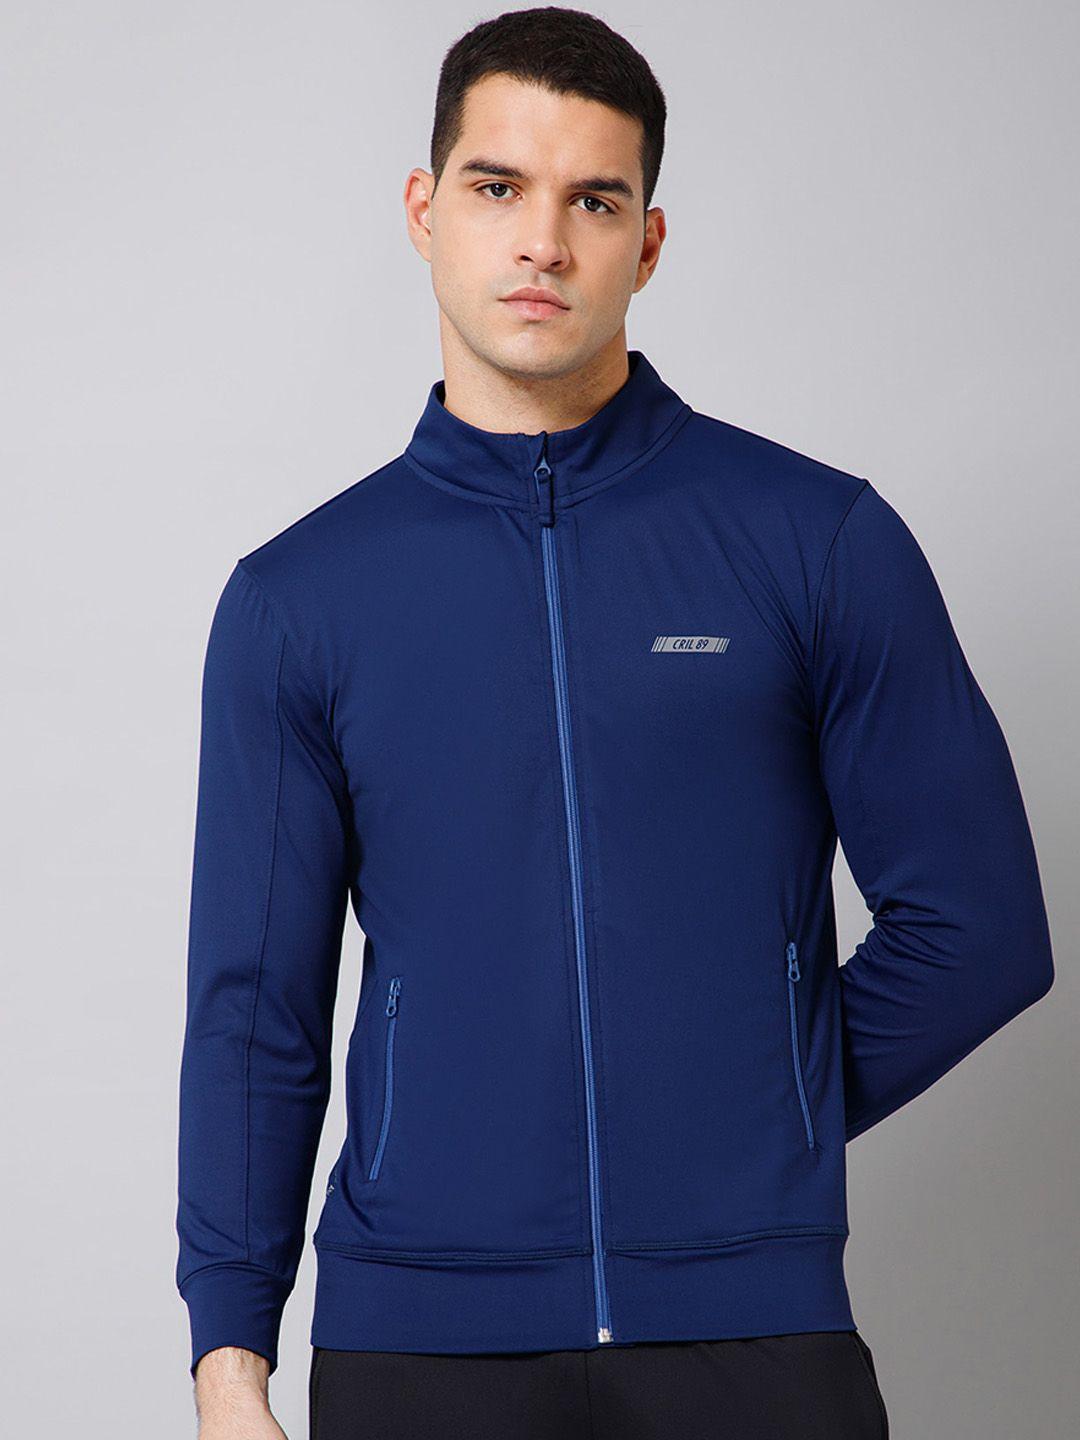 cantabil mock collar lightweight running sporty jacket